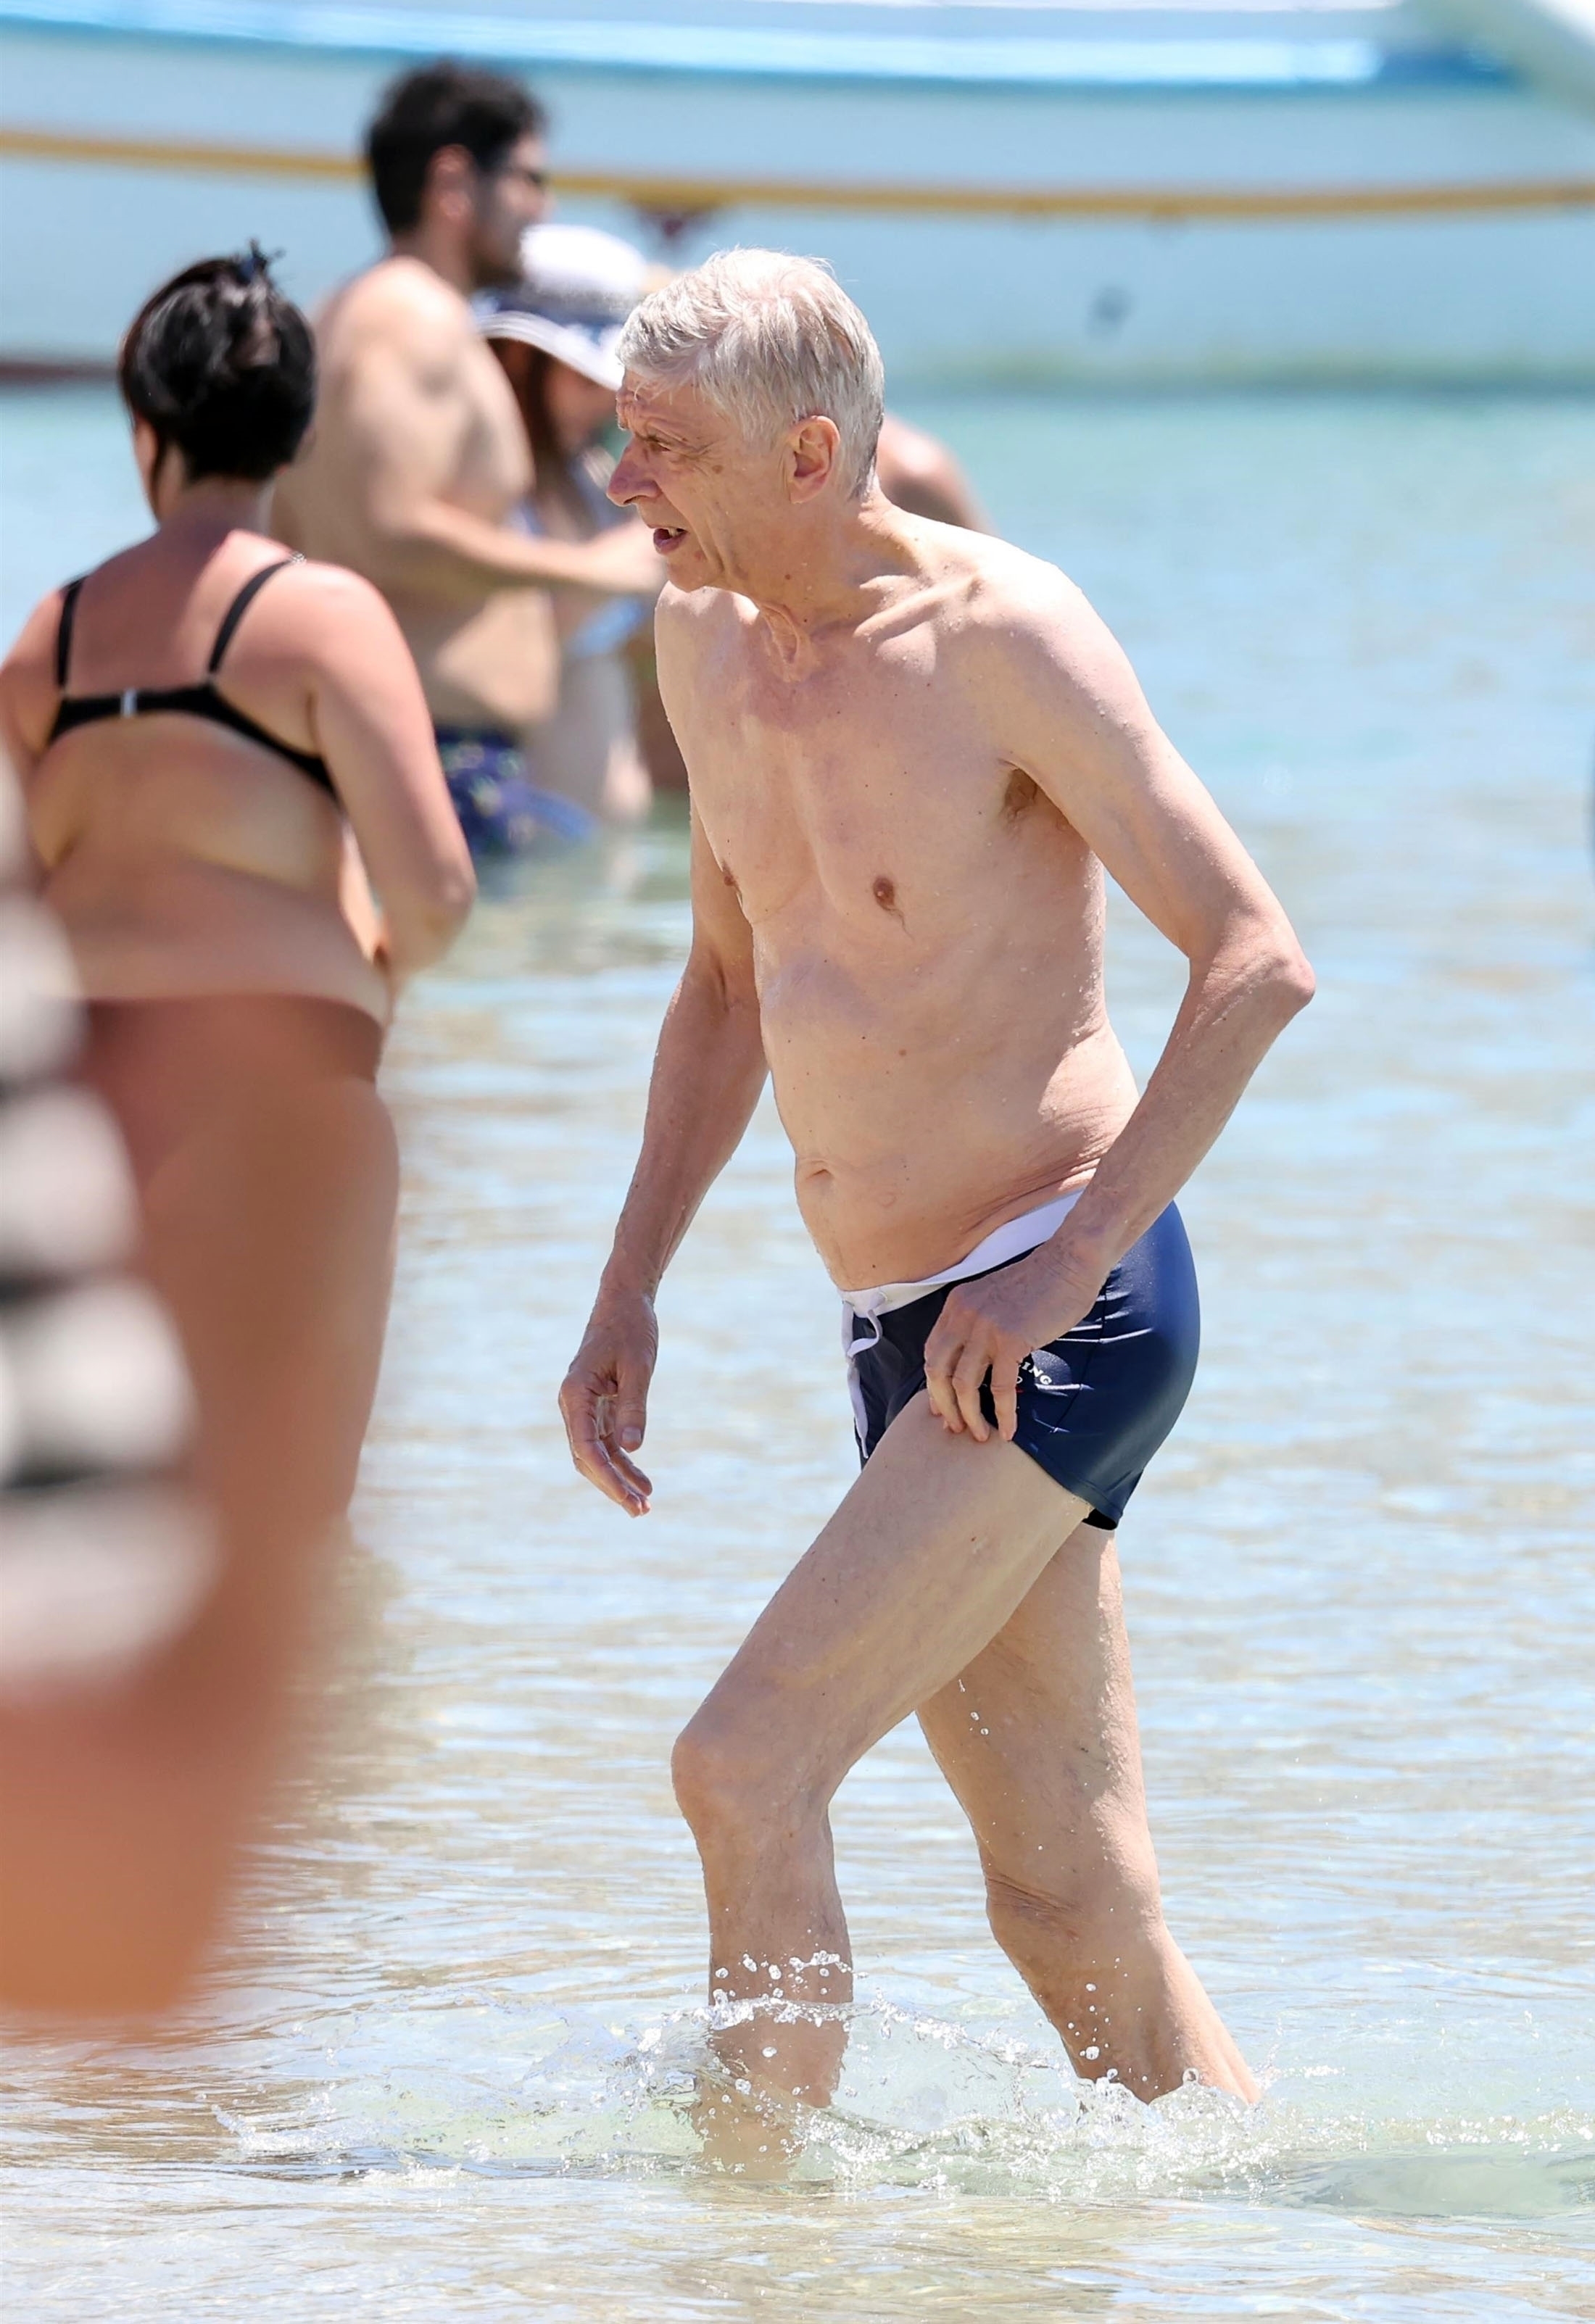 Wenger ging später ins Ägäische Meer baden